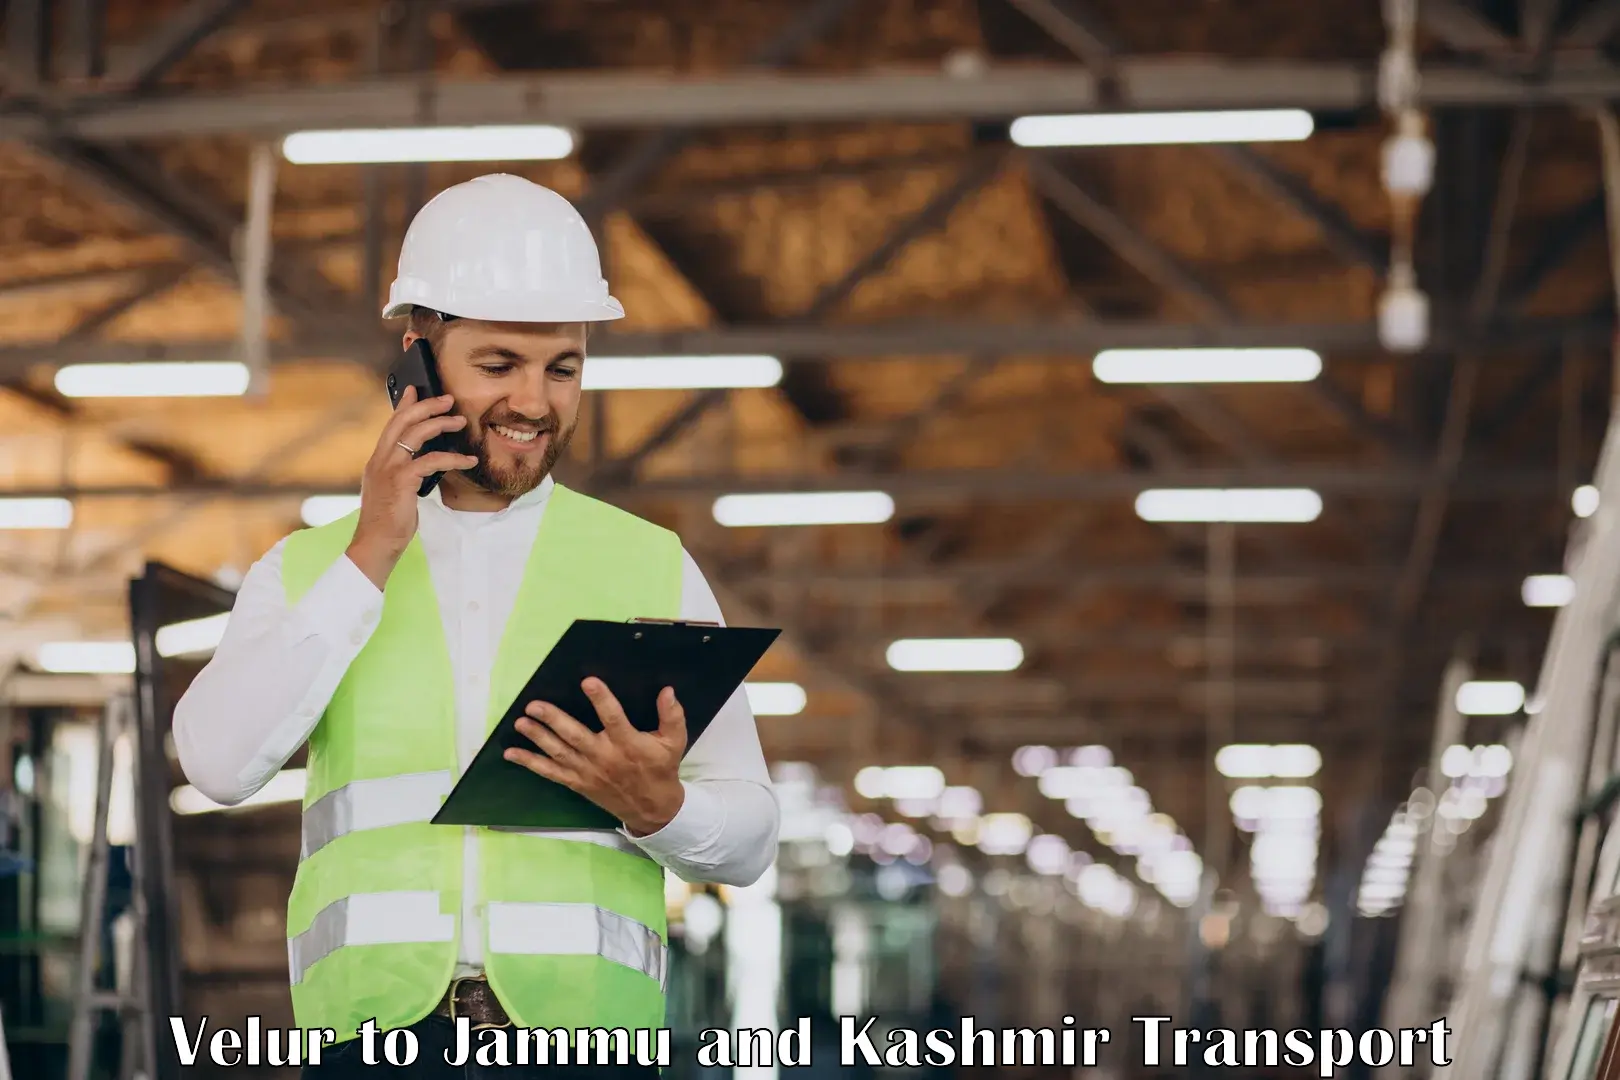 Shipping services Velur to Srinagar Kashmir